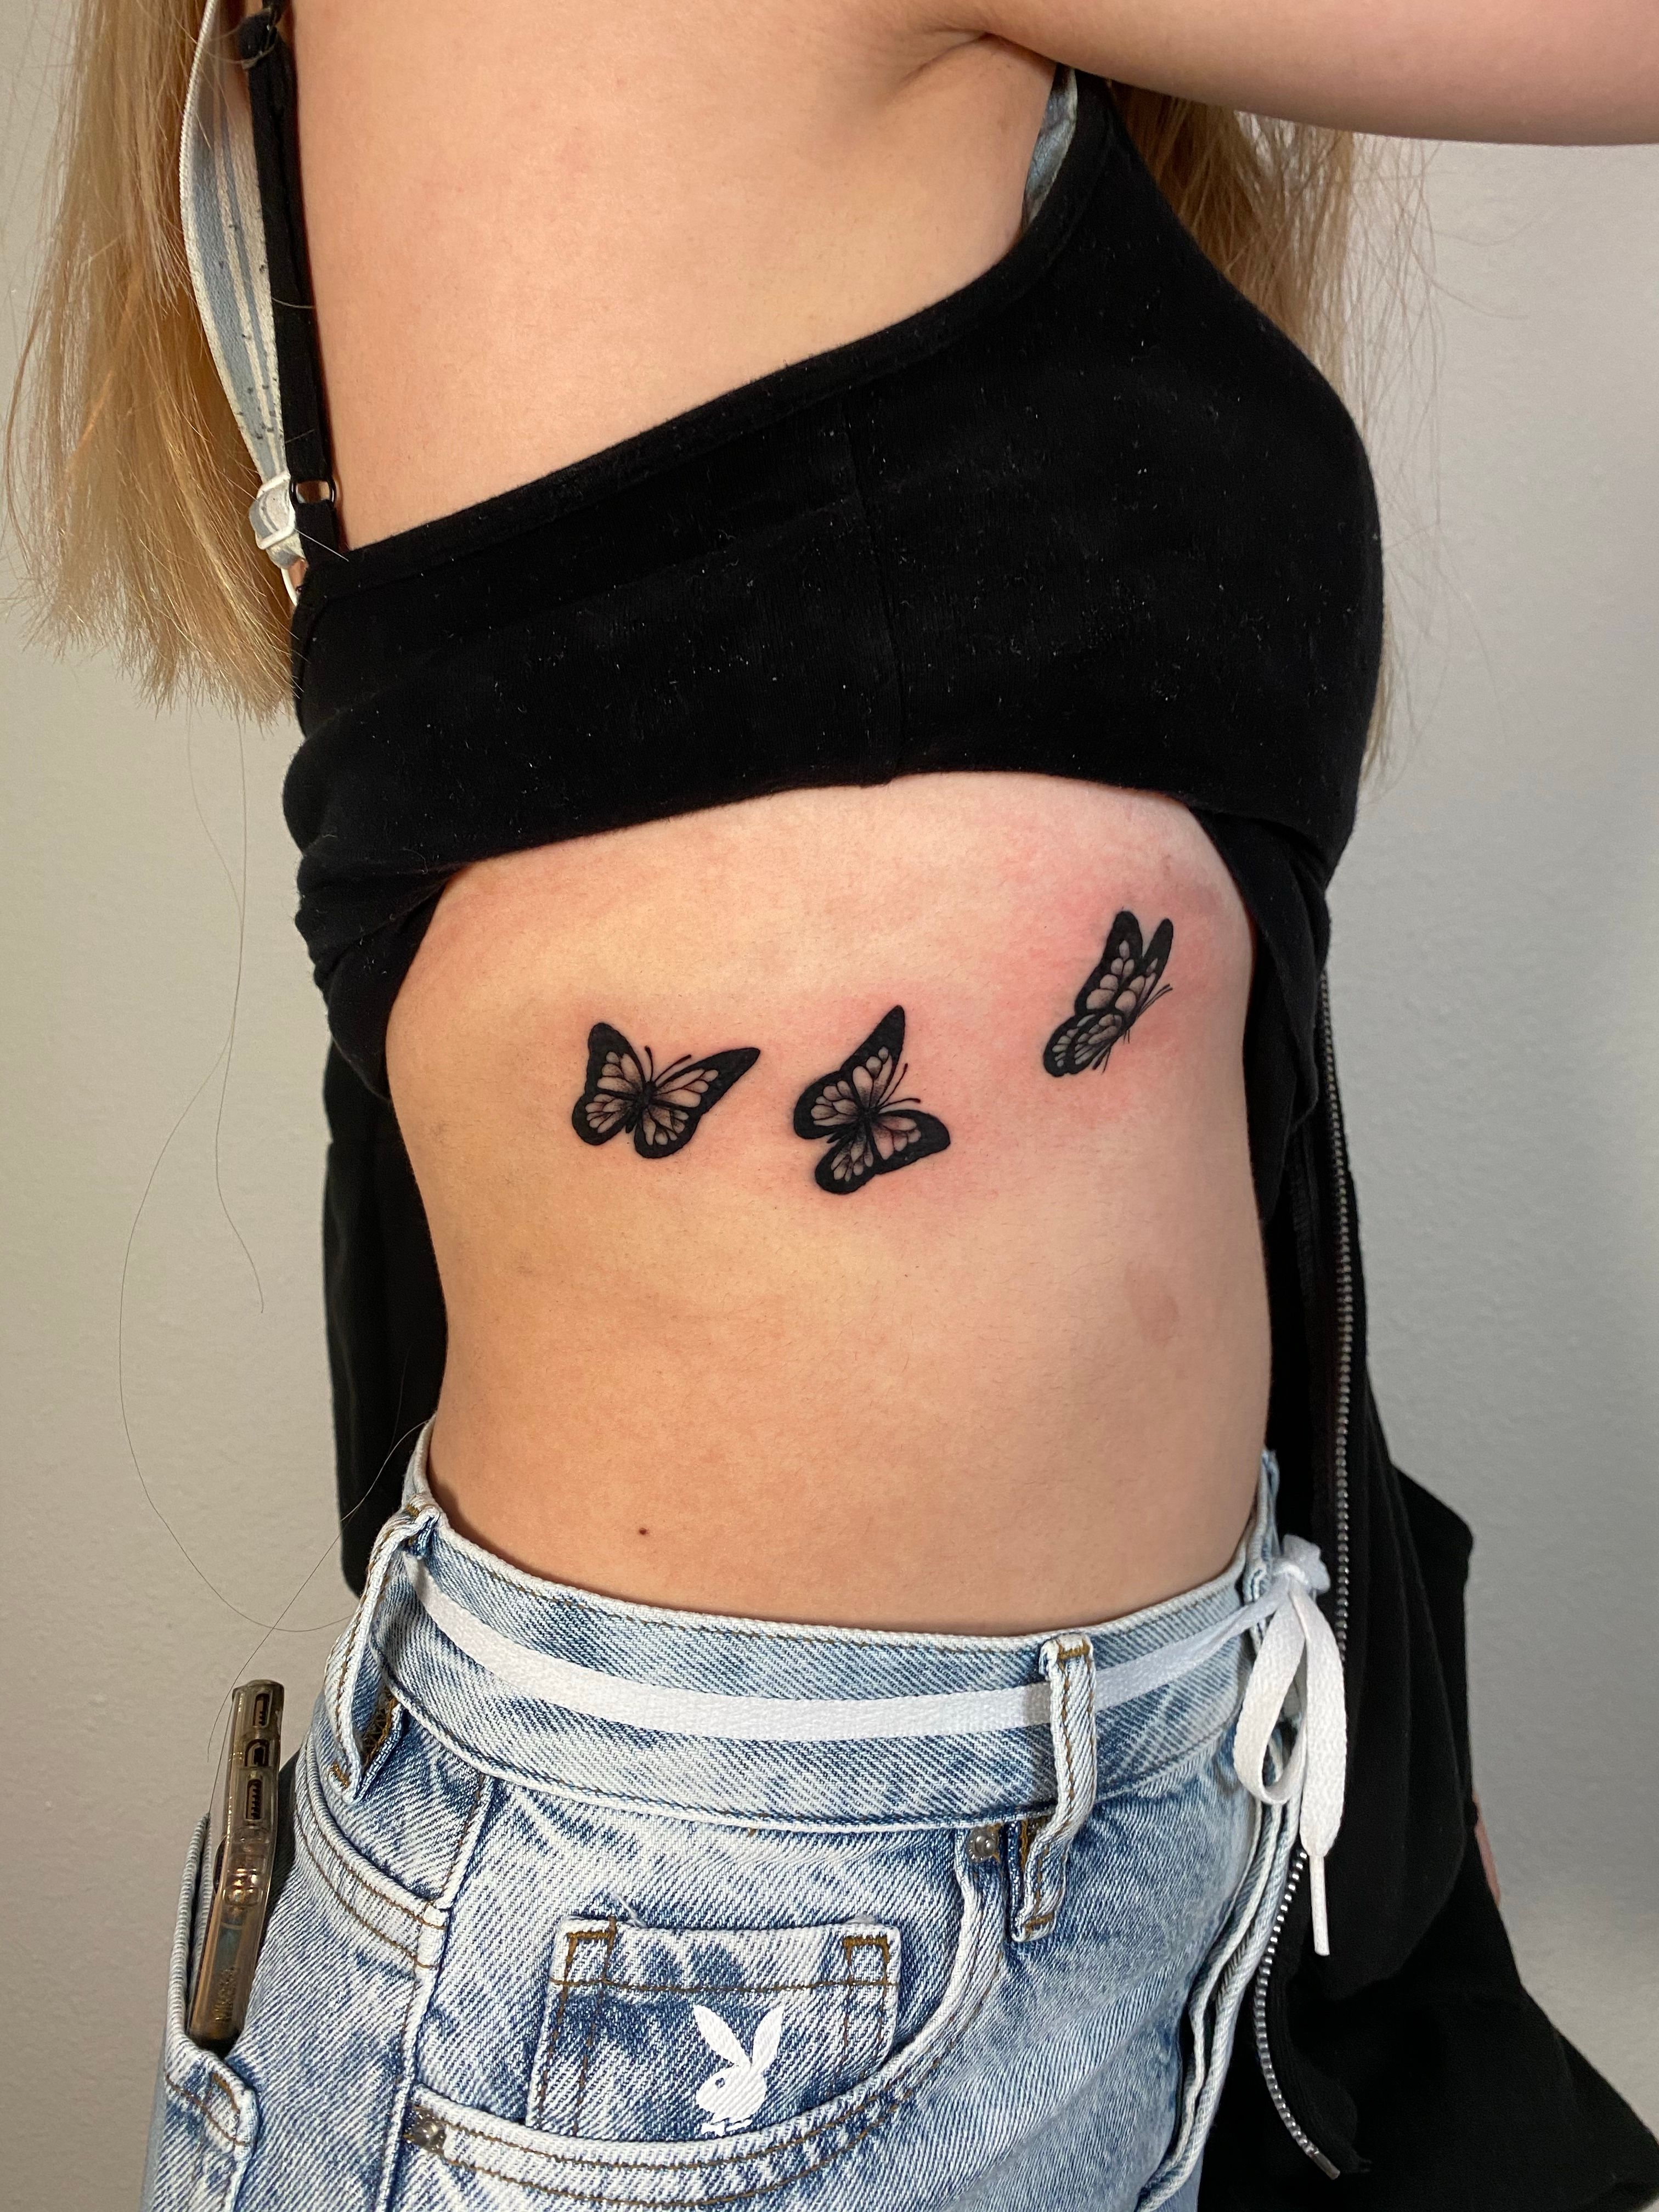 Suffer City Tattoos Dallas, TX Tattoo & Piercing Shop – Suffer City Tattoos  Dallas, TX Tattoo & Piercing Shop